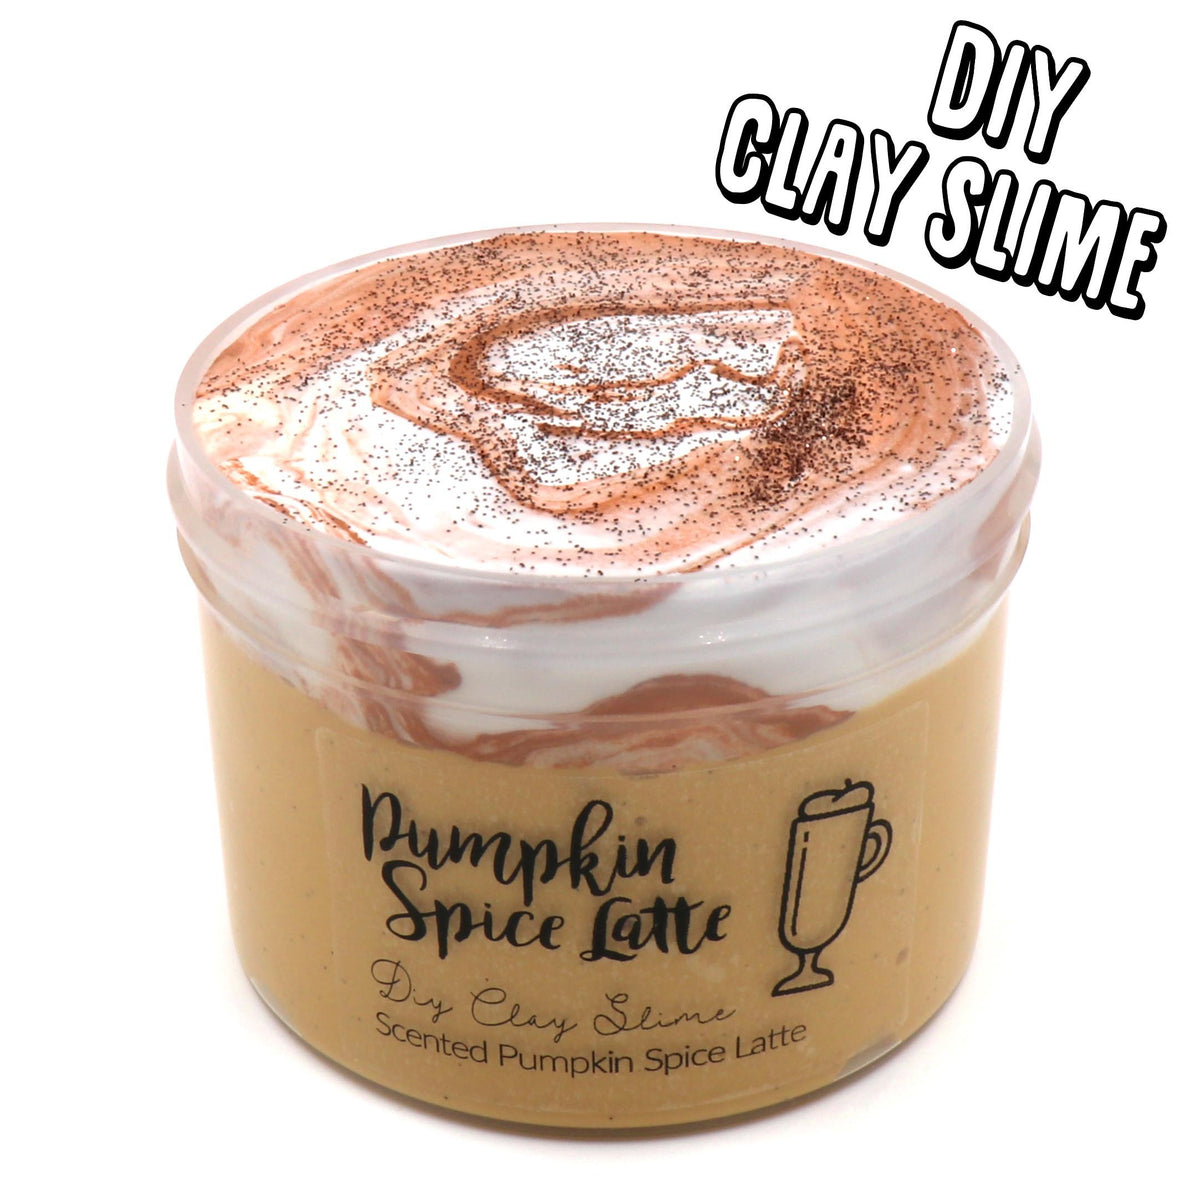 Pumpkin Spice Latte Thickie Diy Clay Slime